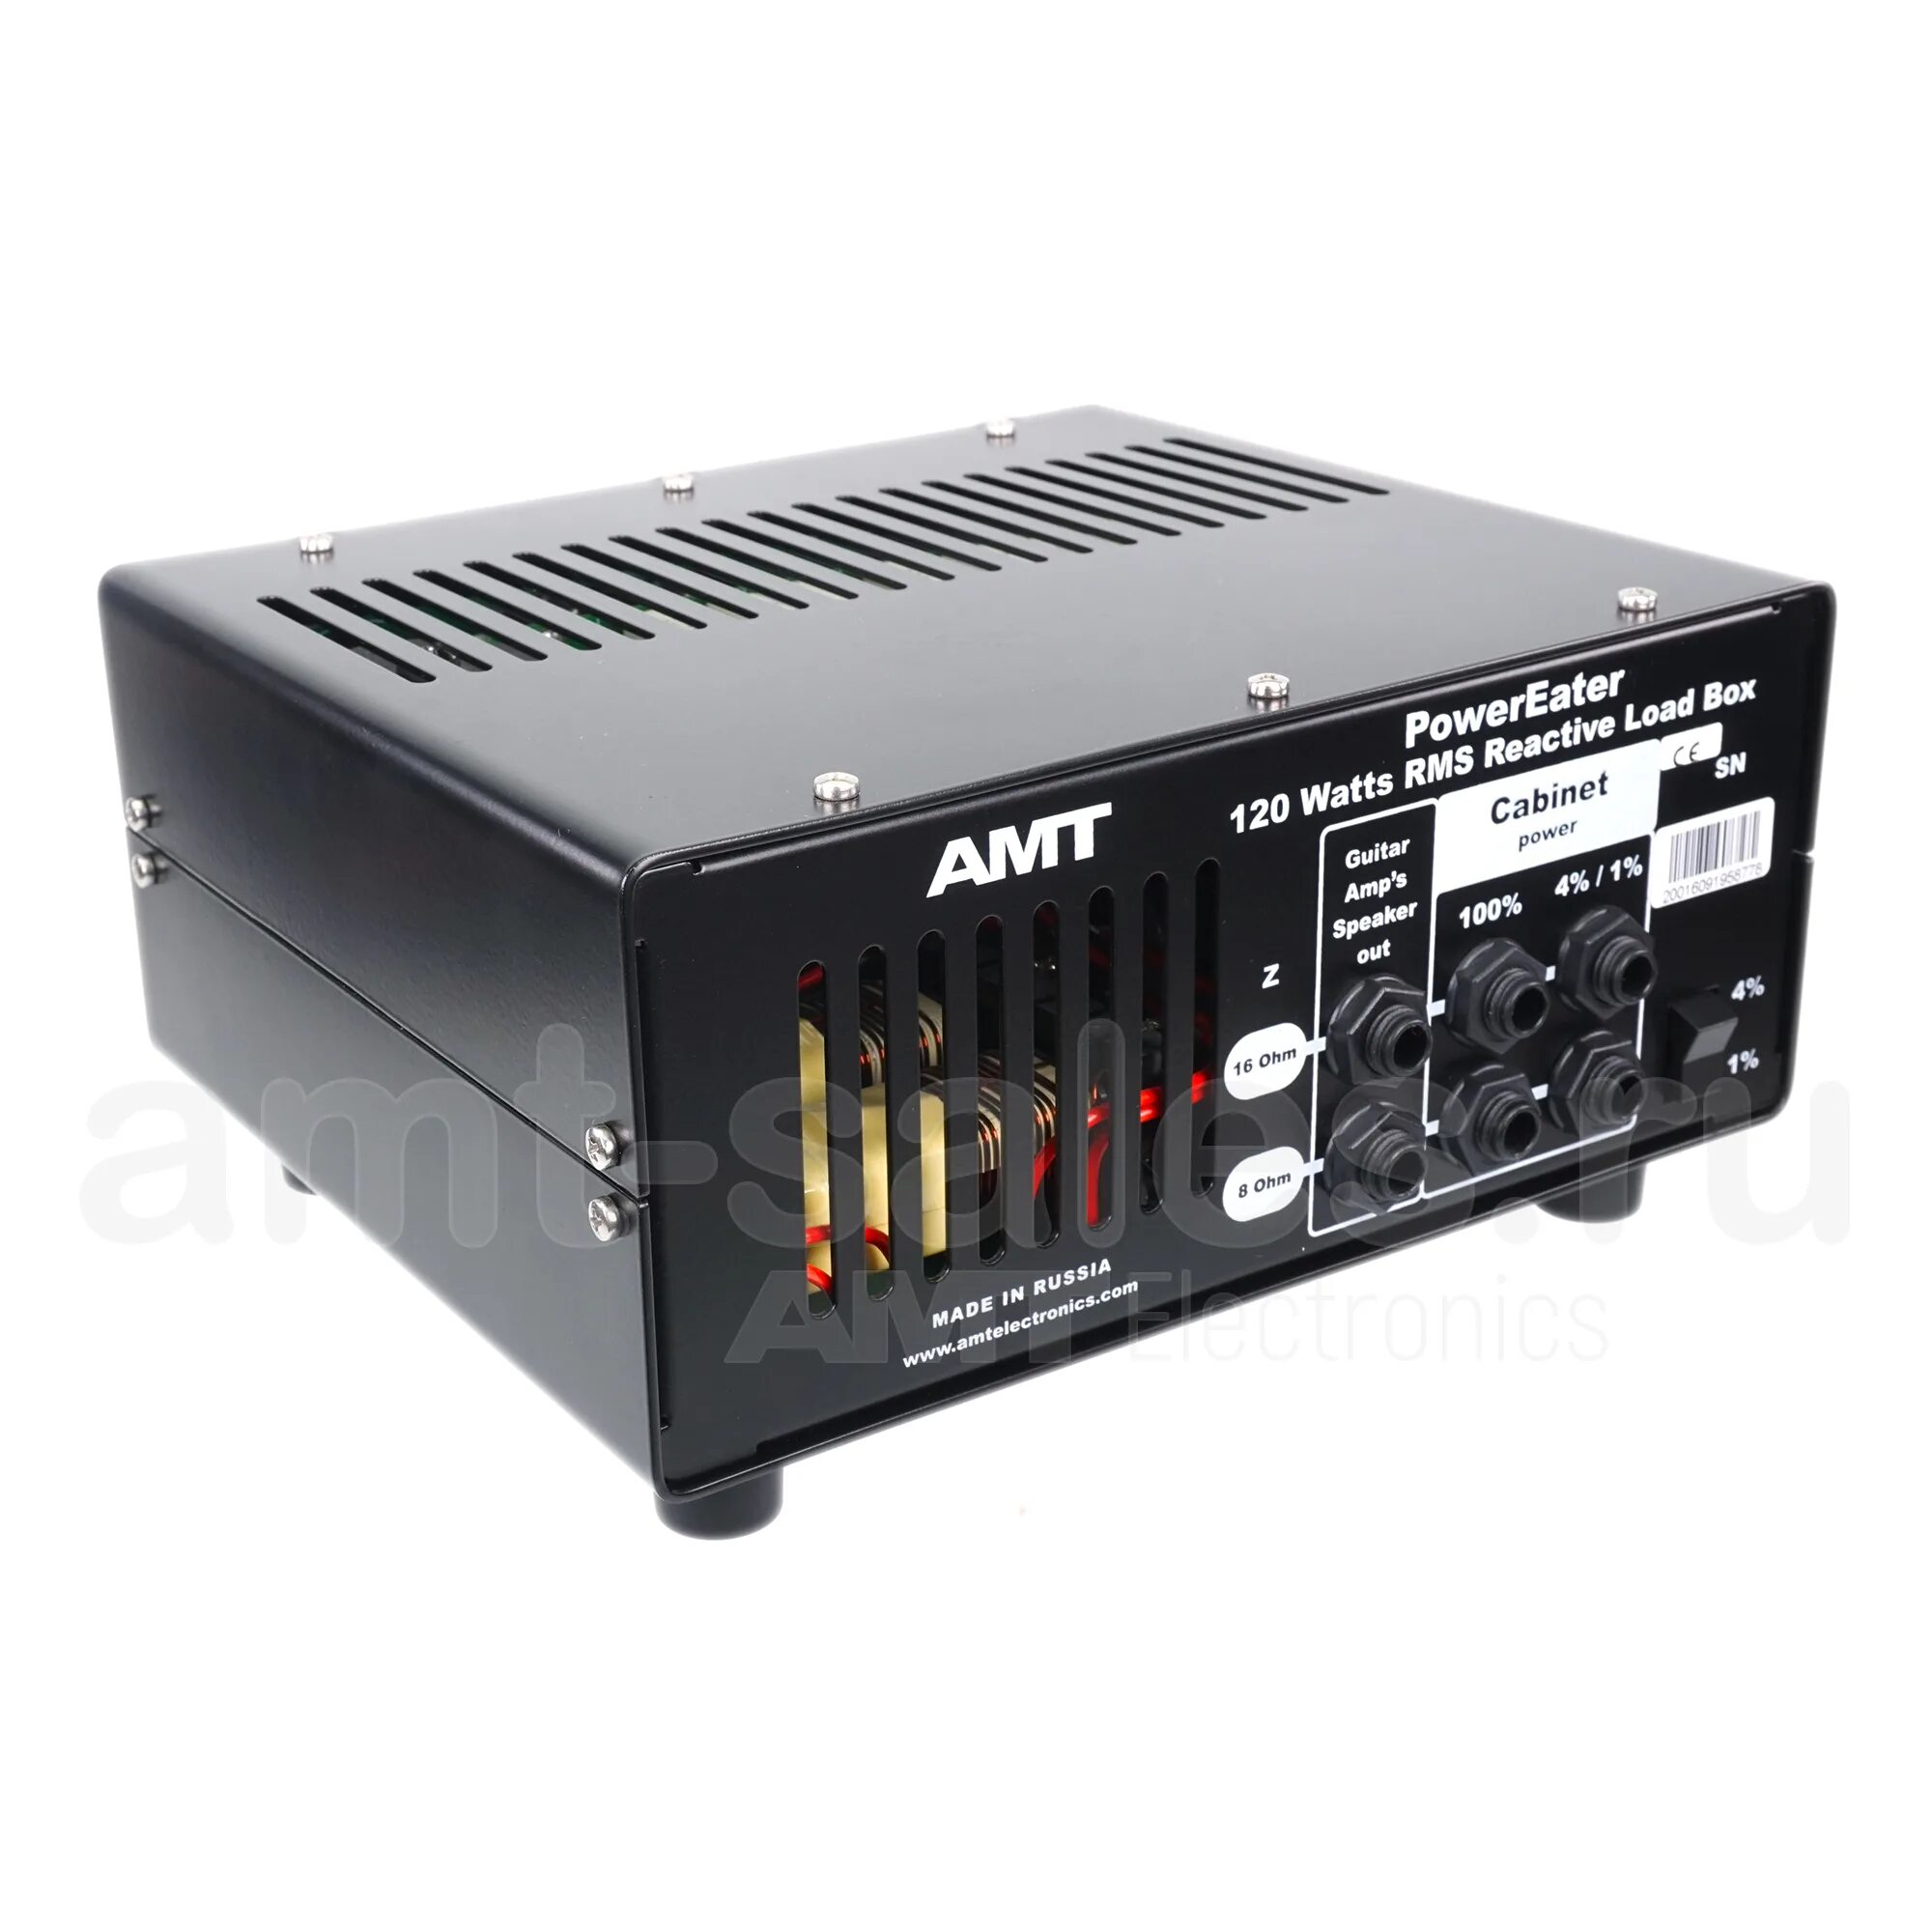 Load box. AMT Electronics Power Eater pe – 120. AMT Electronics pe (Power Eater) 120 load Box. AMT Power Eater pe-120 Cab SIM out "наушники". AMT Power Eater pe-15 габариты.